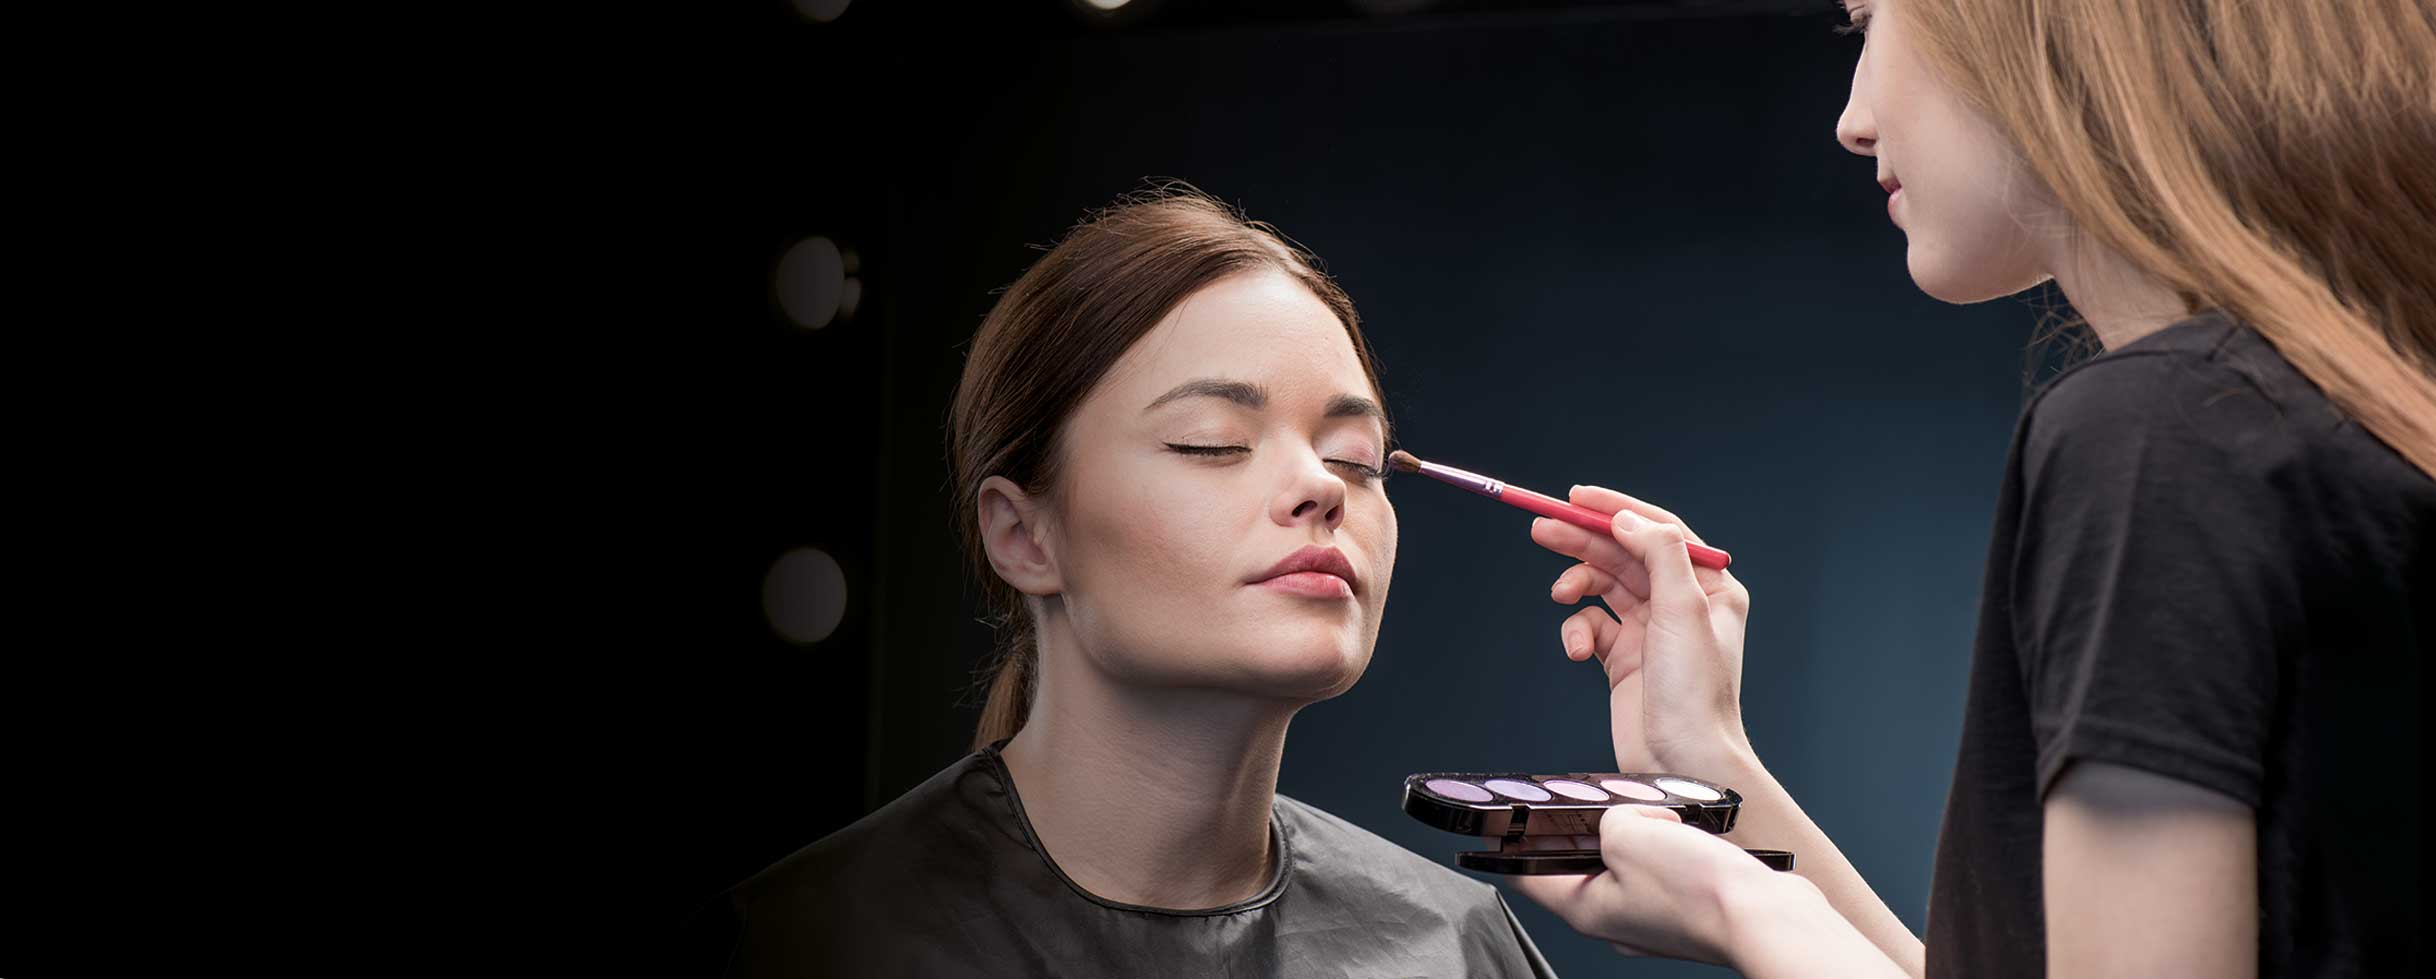 mujer tomando clases de maquillaje